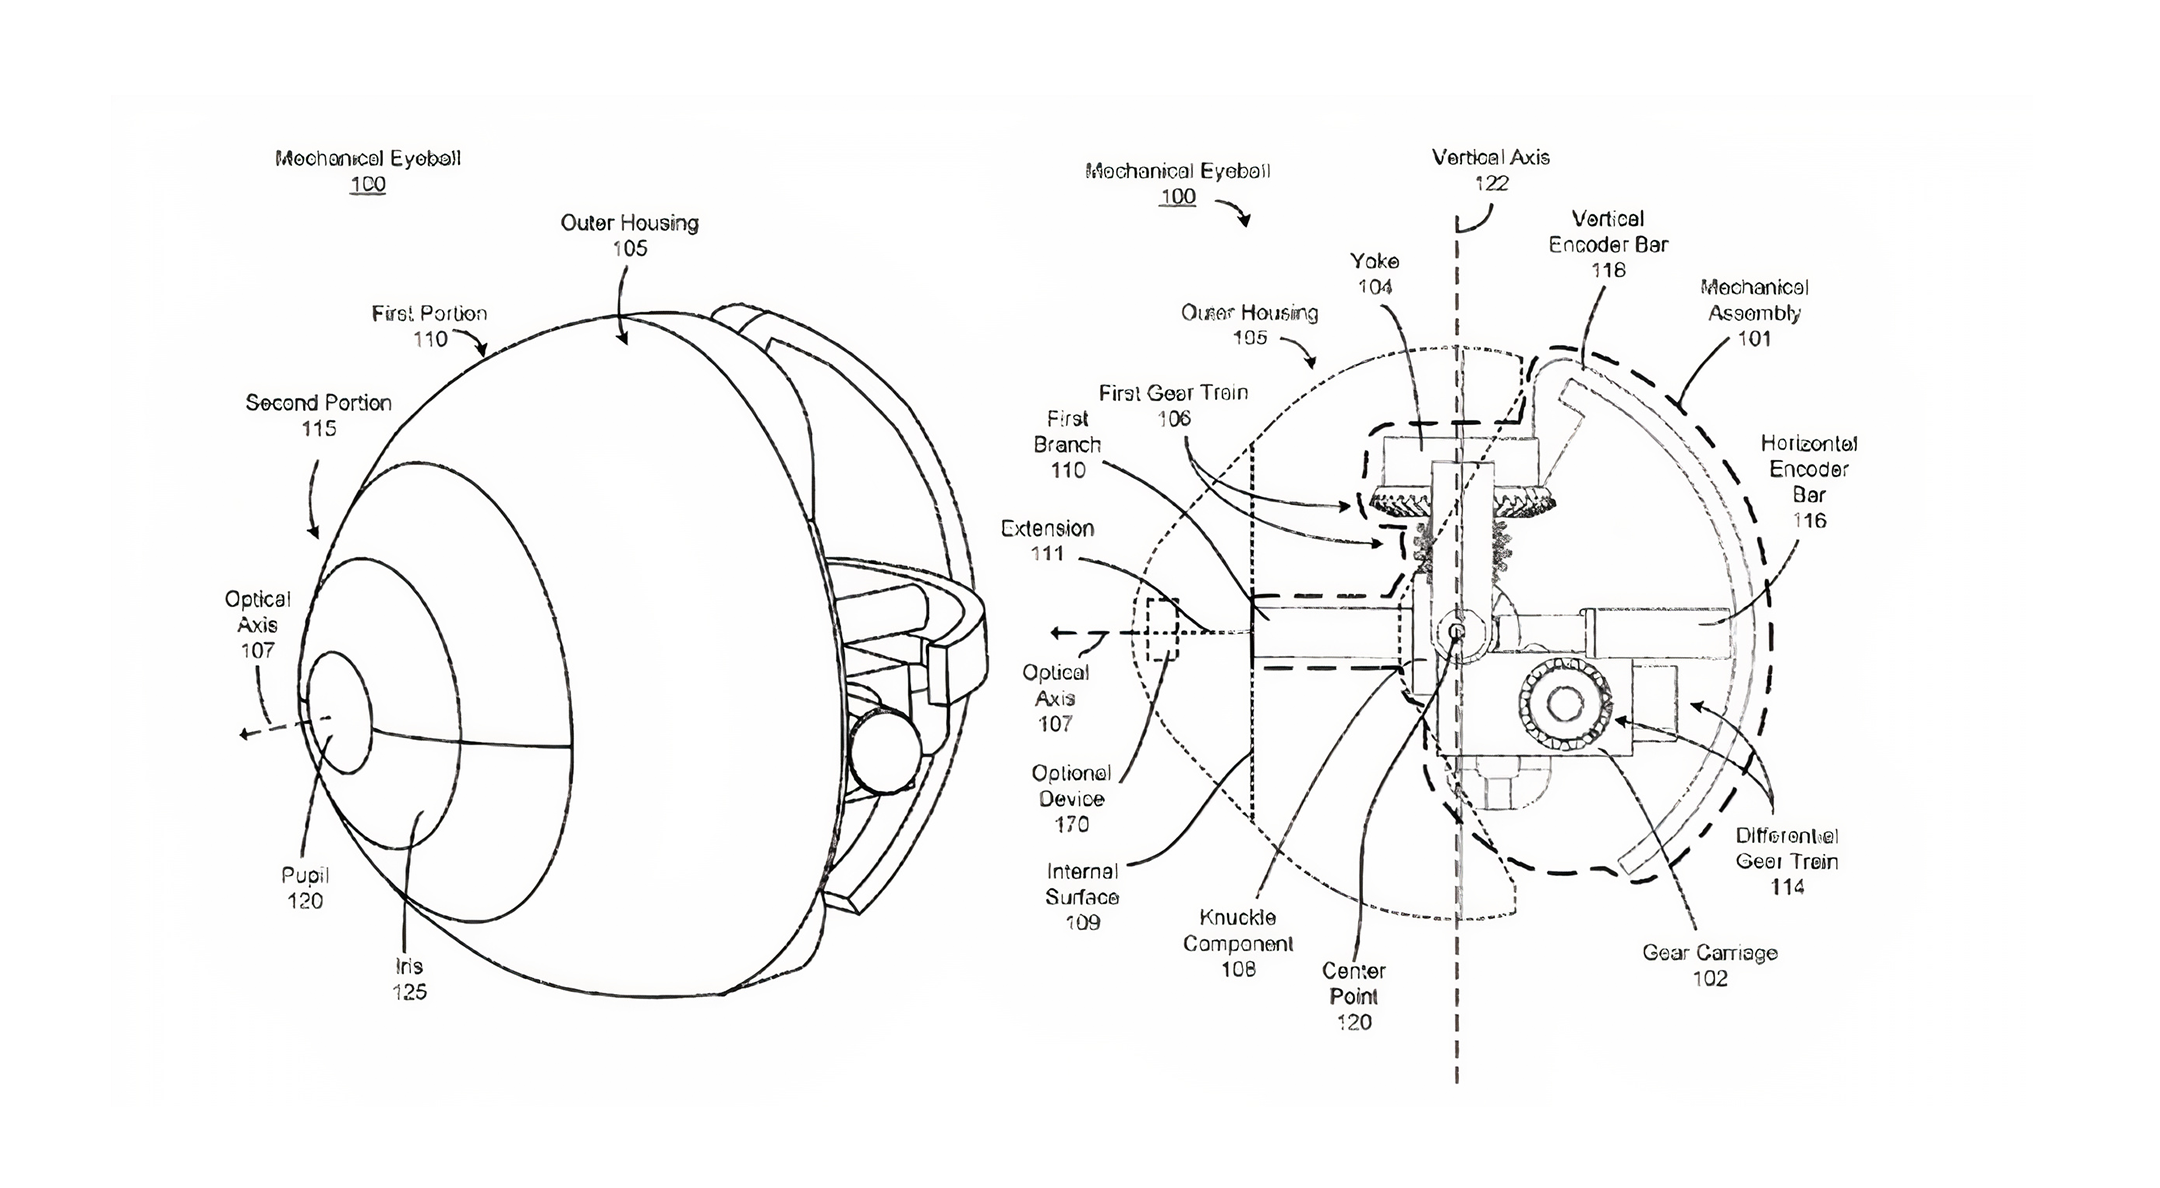 Metaがメタバースの世界と繋がる金属製ロボット目玉｢Mechanical eyeball 100｣の特許を取得